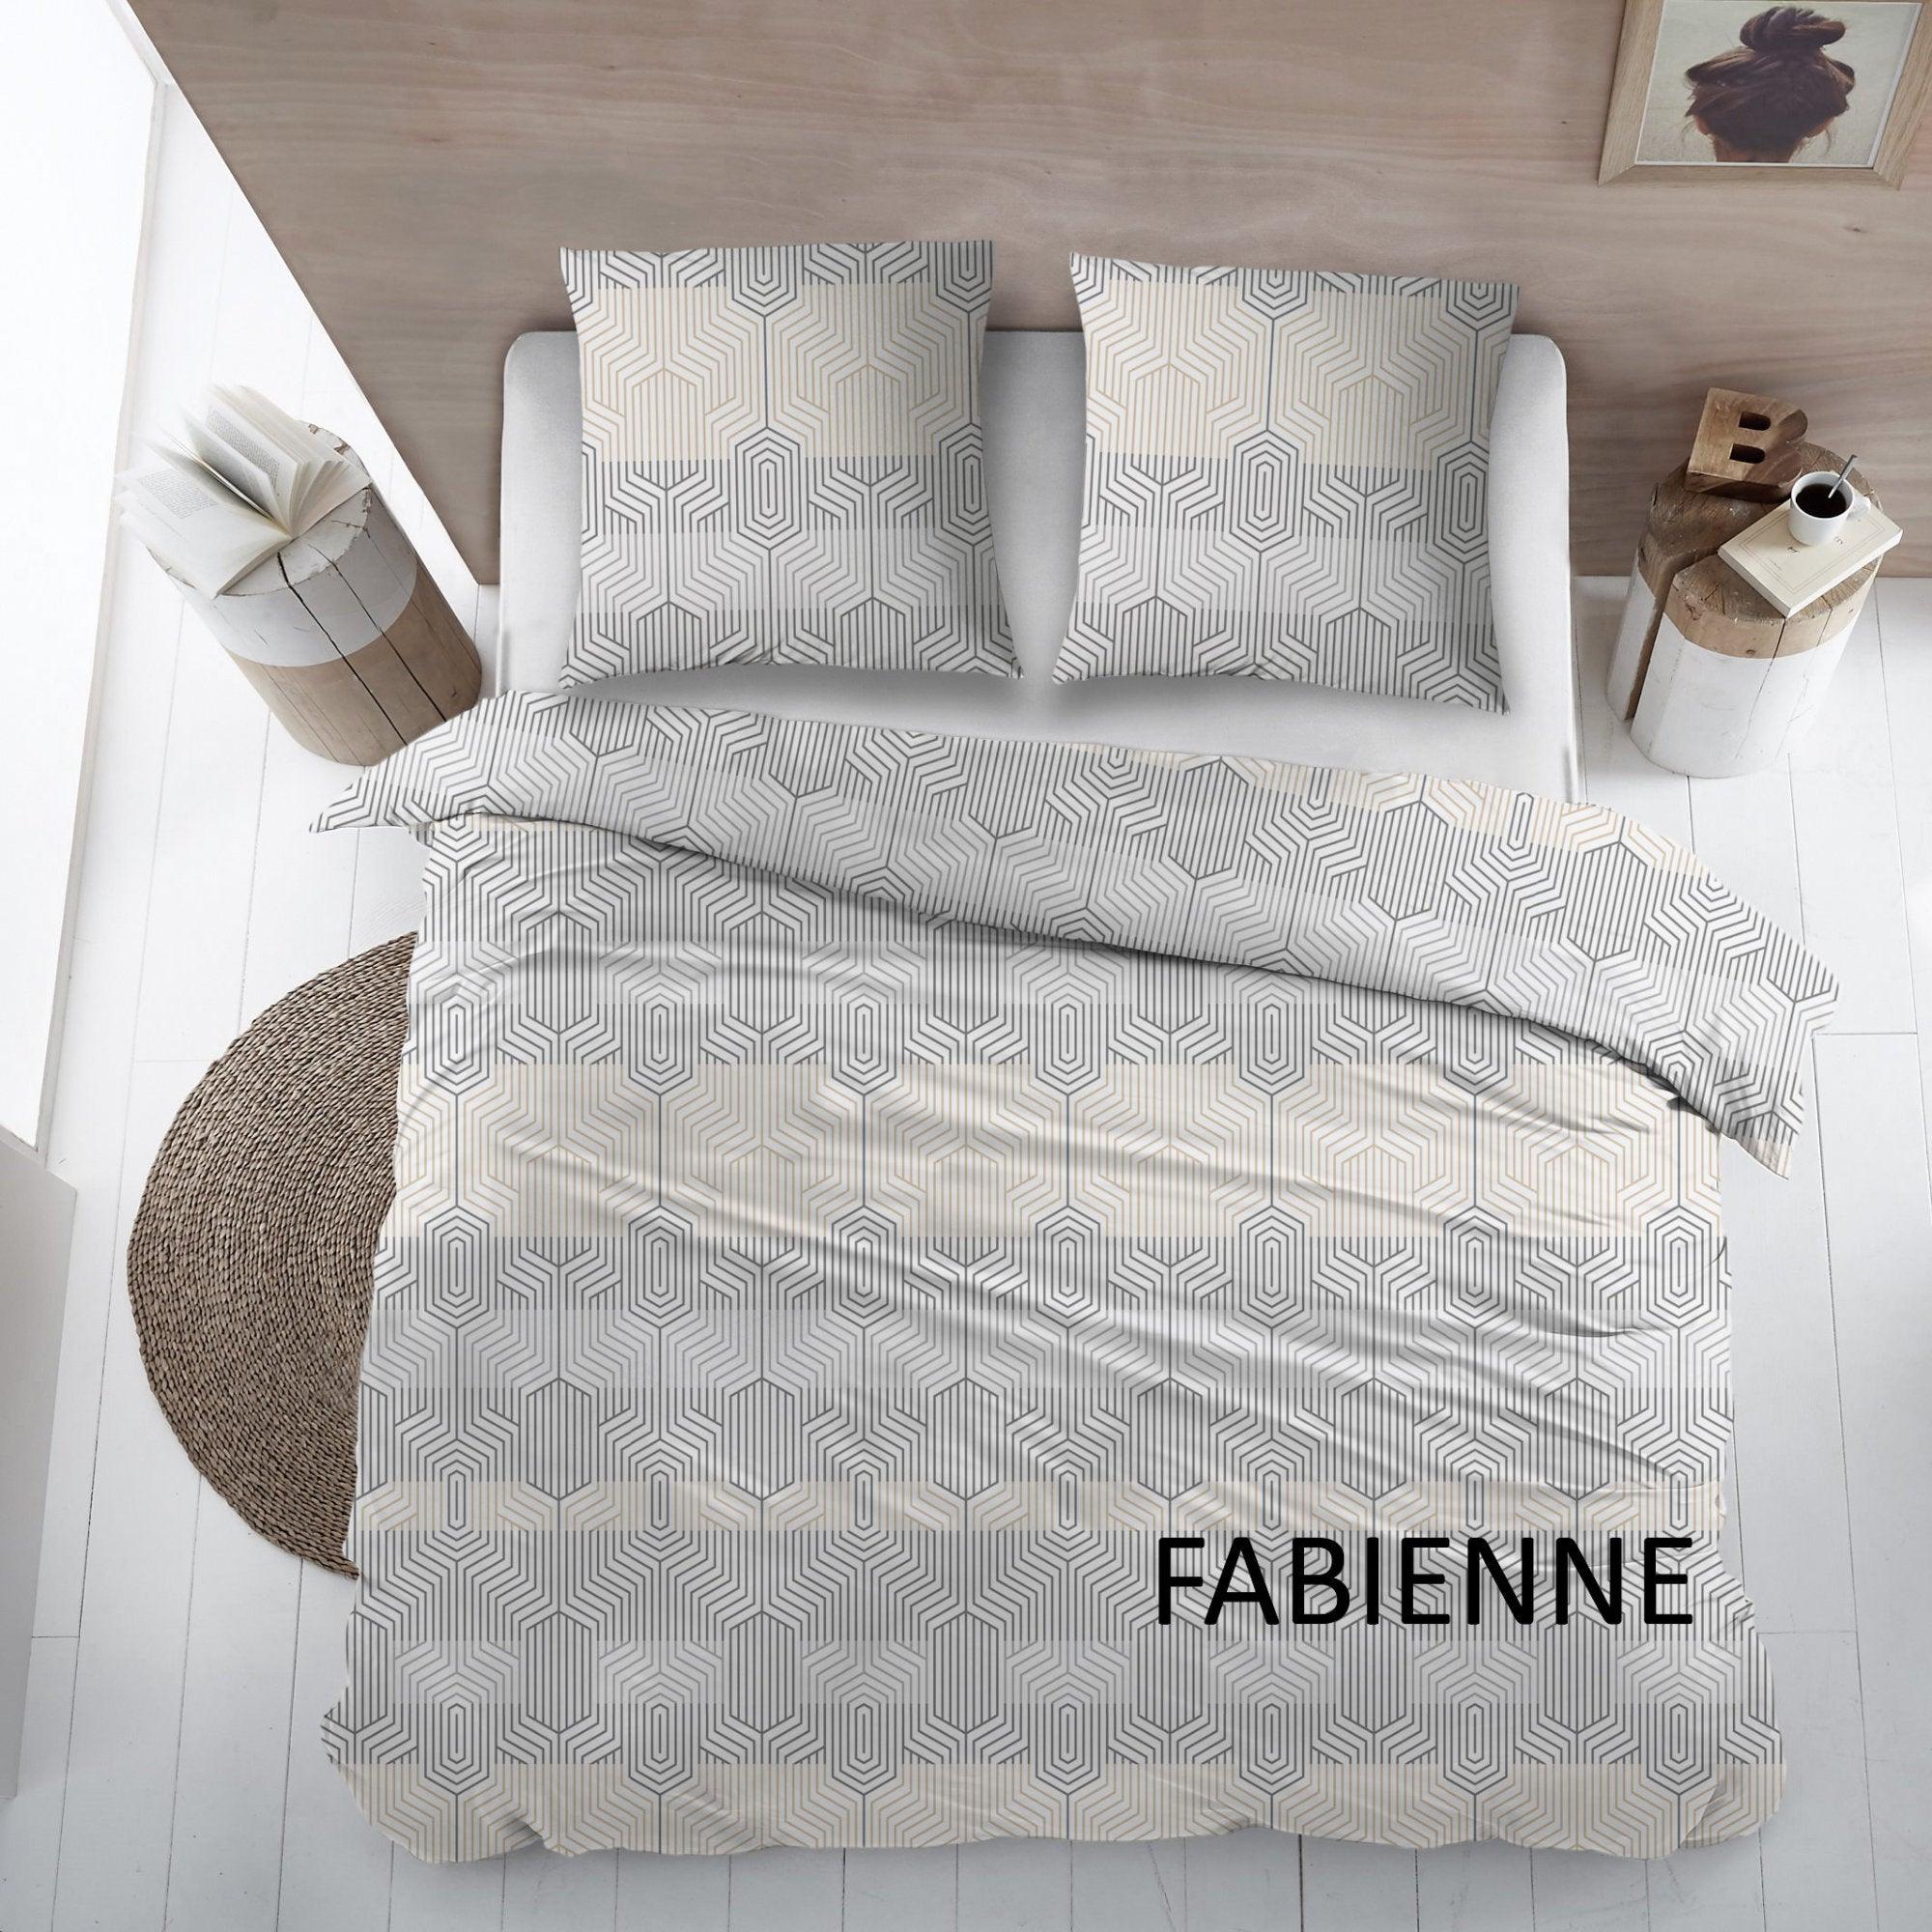 Cottons Lakenset Fabienne Flanel - Bedtextielonline.be